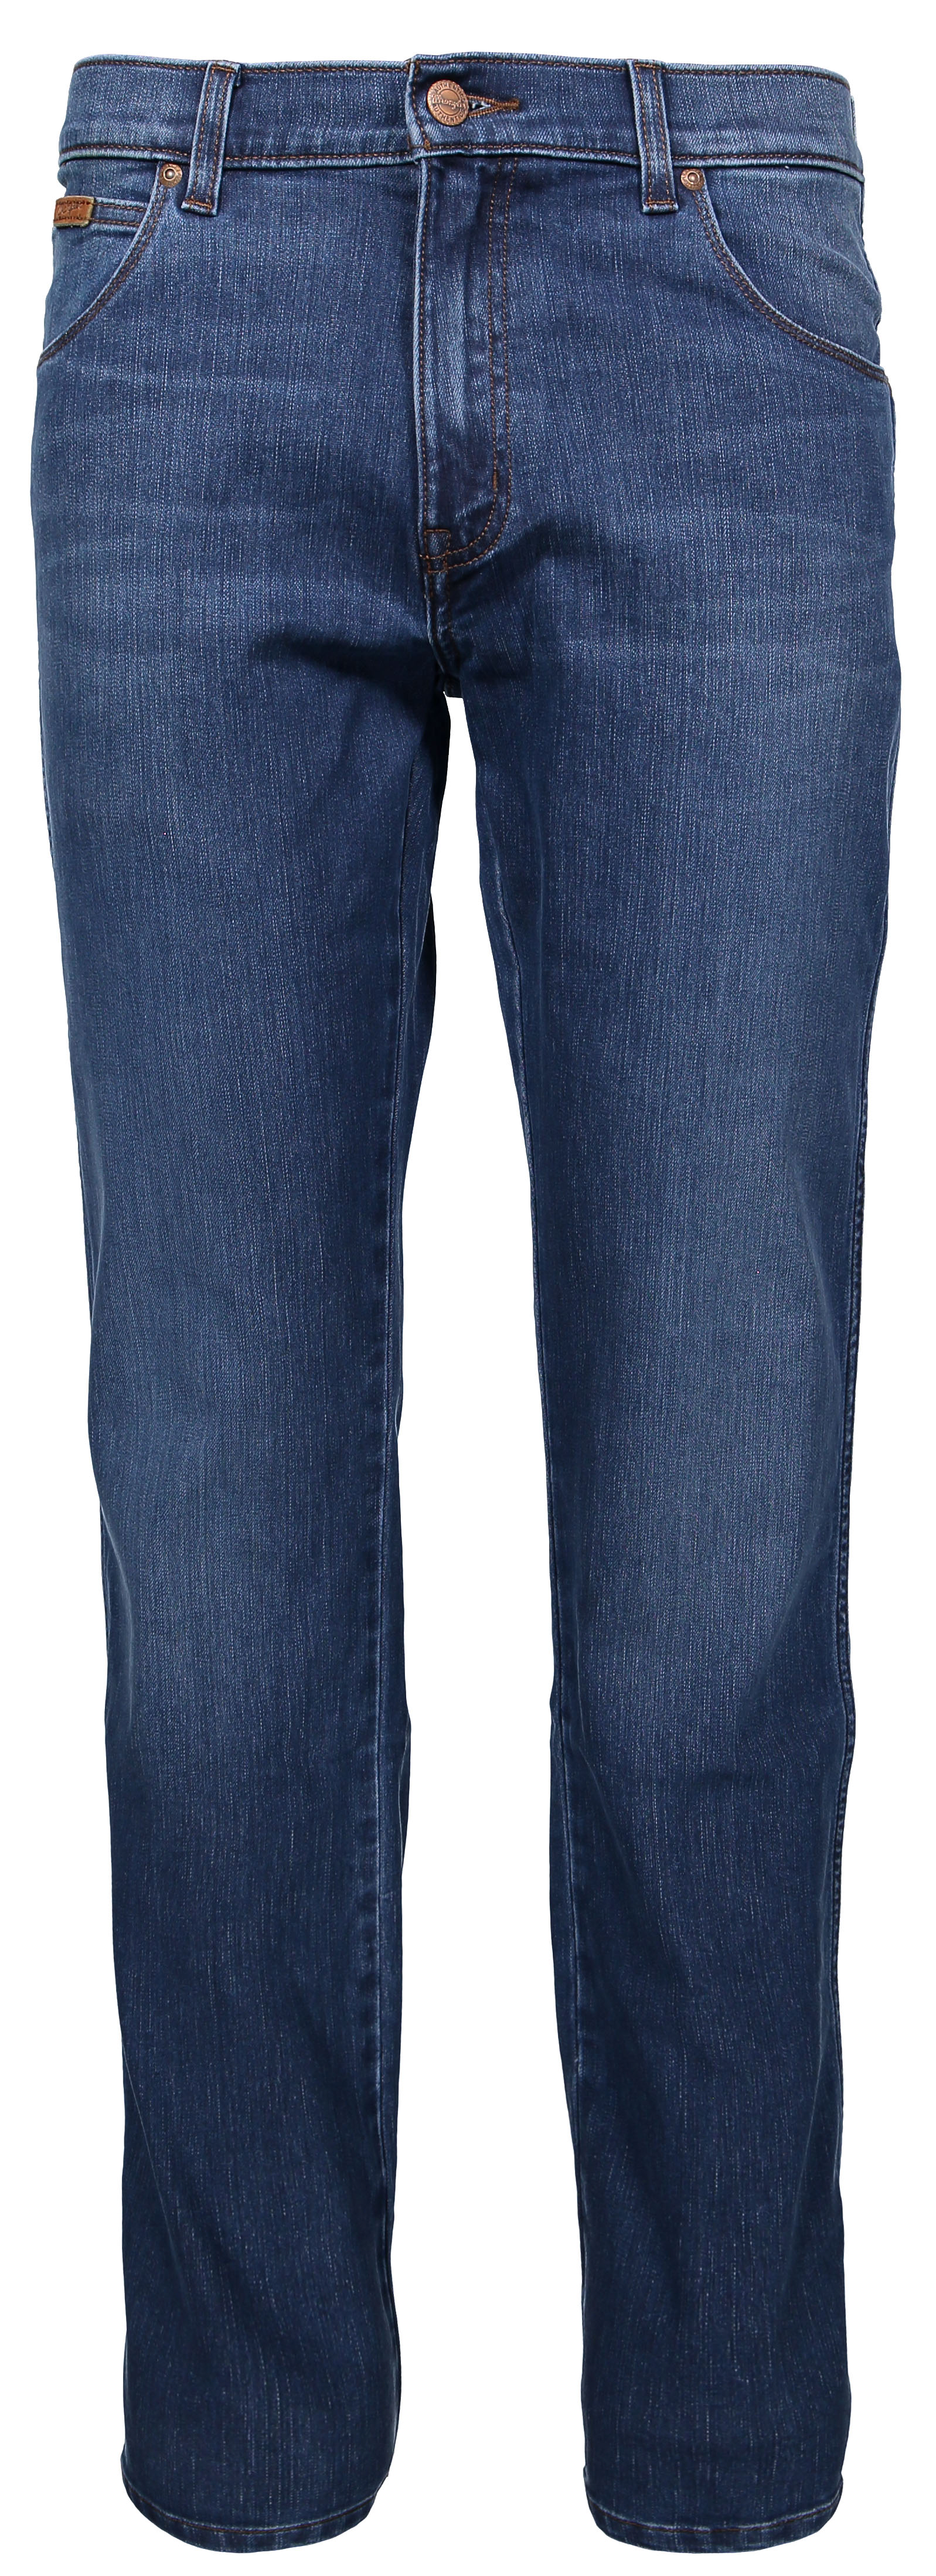 WRANGLER TEXAS fuzzy fix W121EE267 | DENIM | Texas | Wrangler Jeans ...